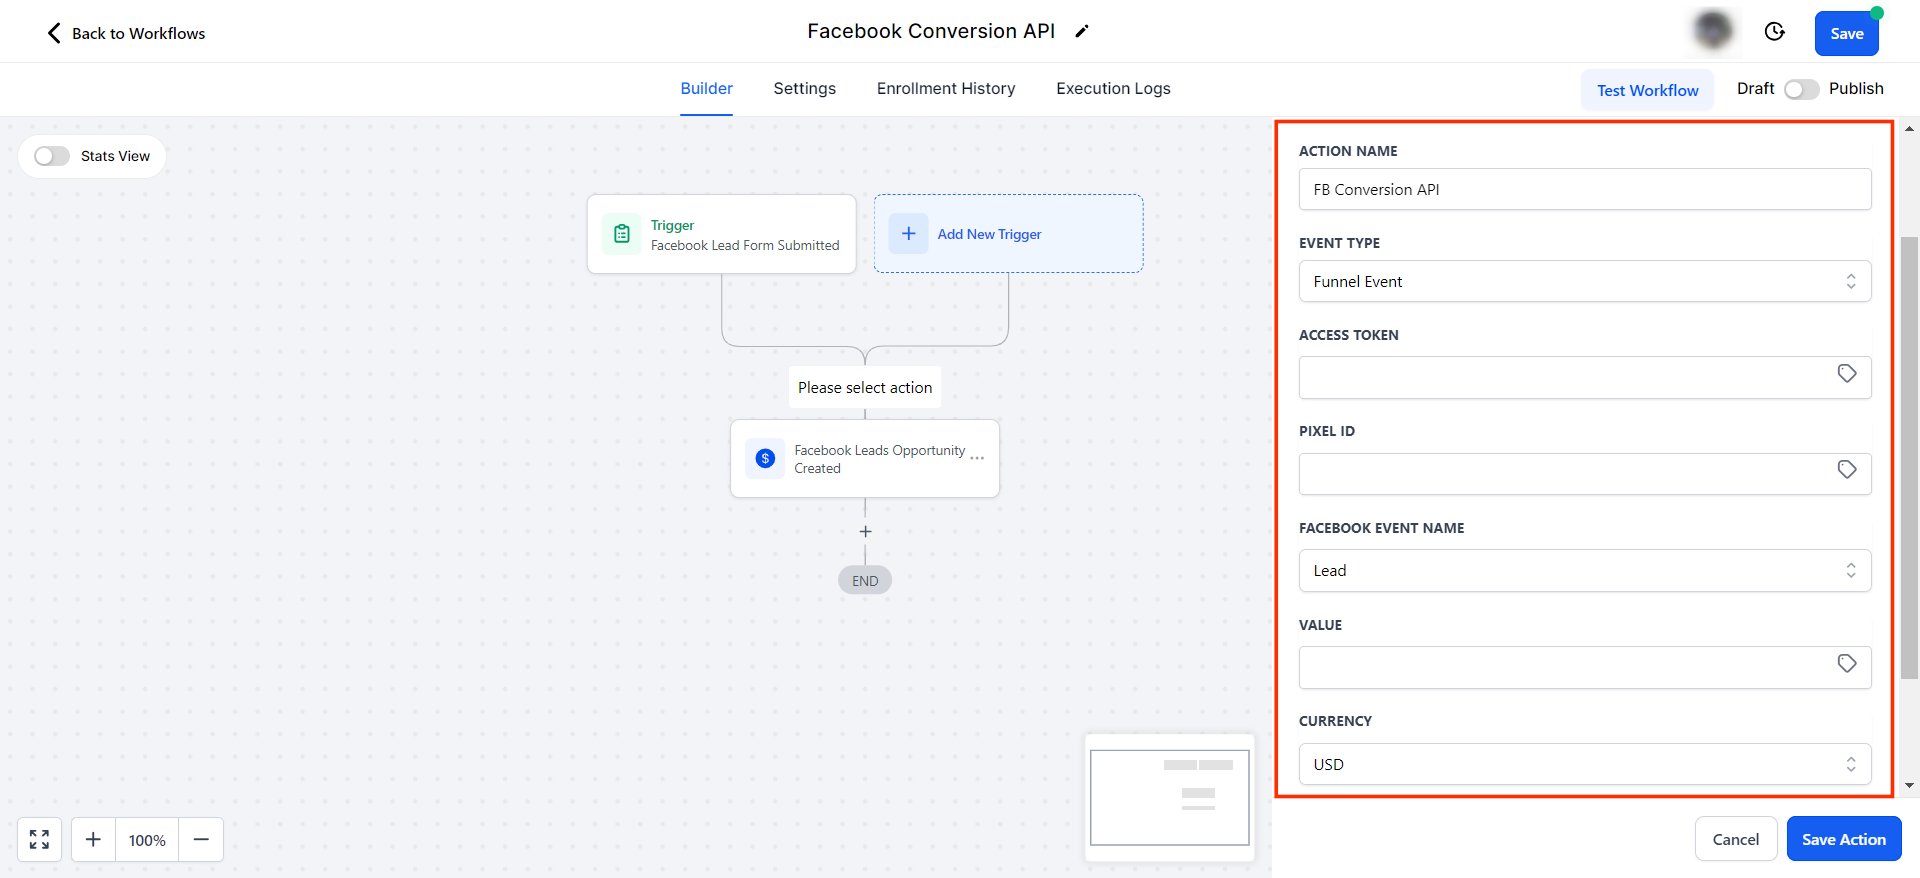 Facebook Conversion API Workflow